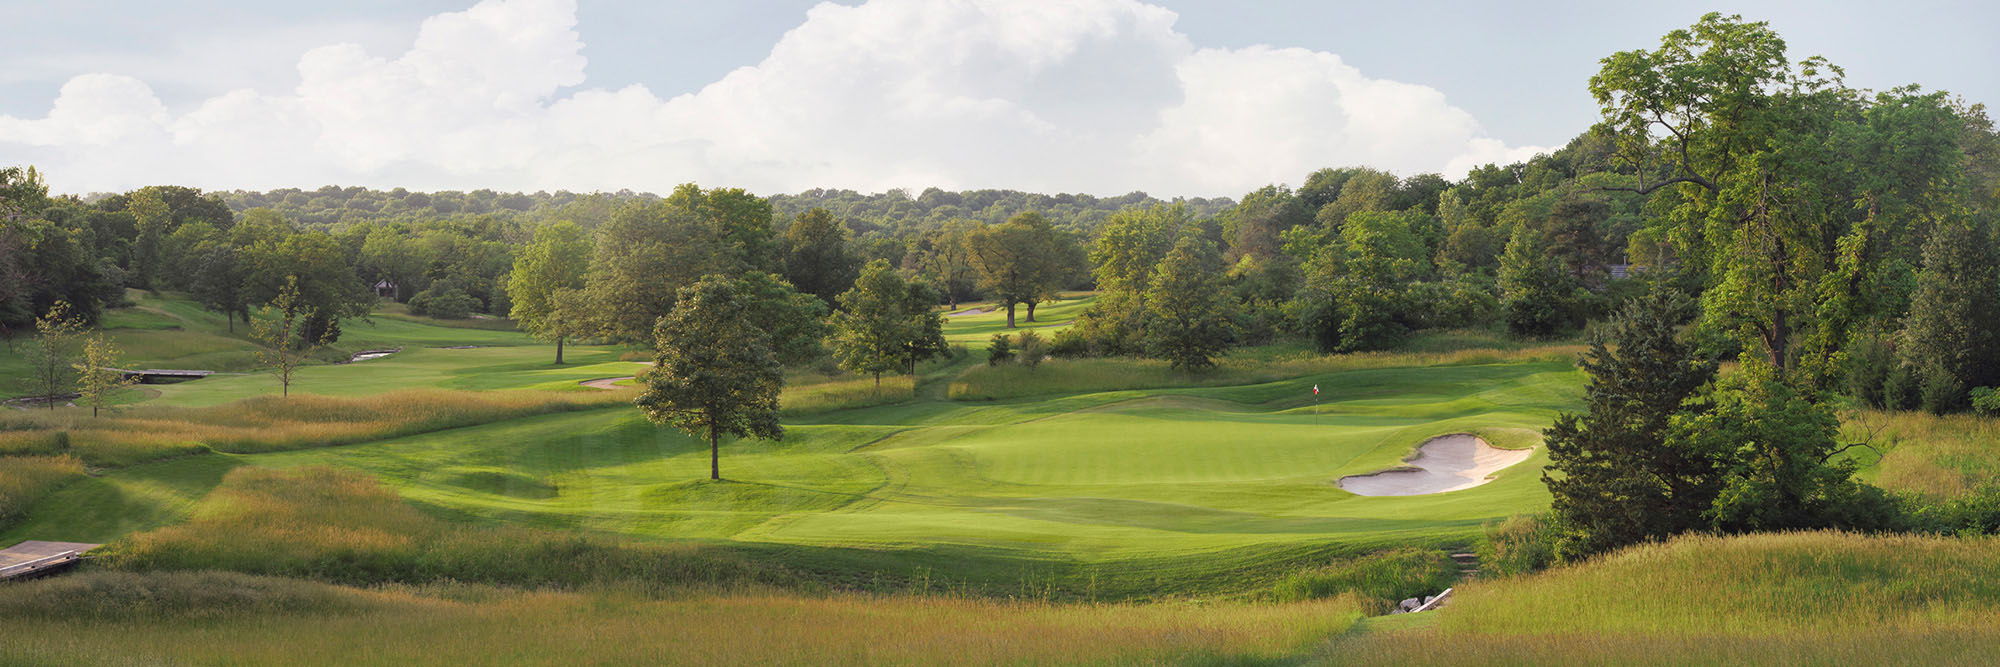 Golf Course Image - Hallbrook No. 13